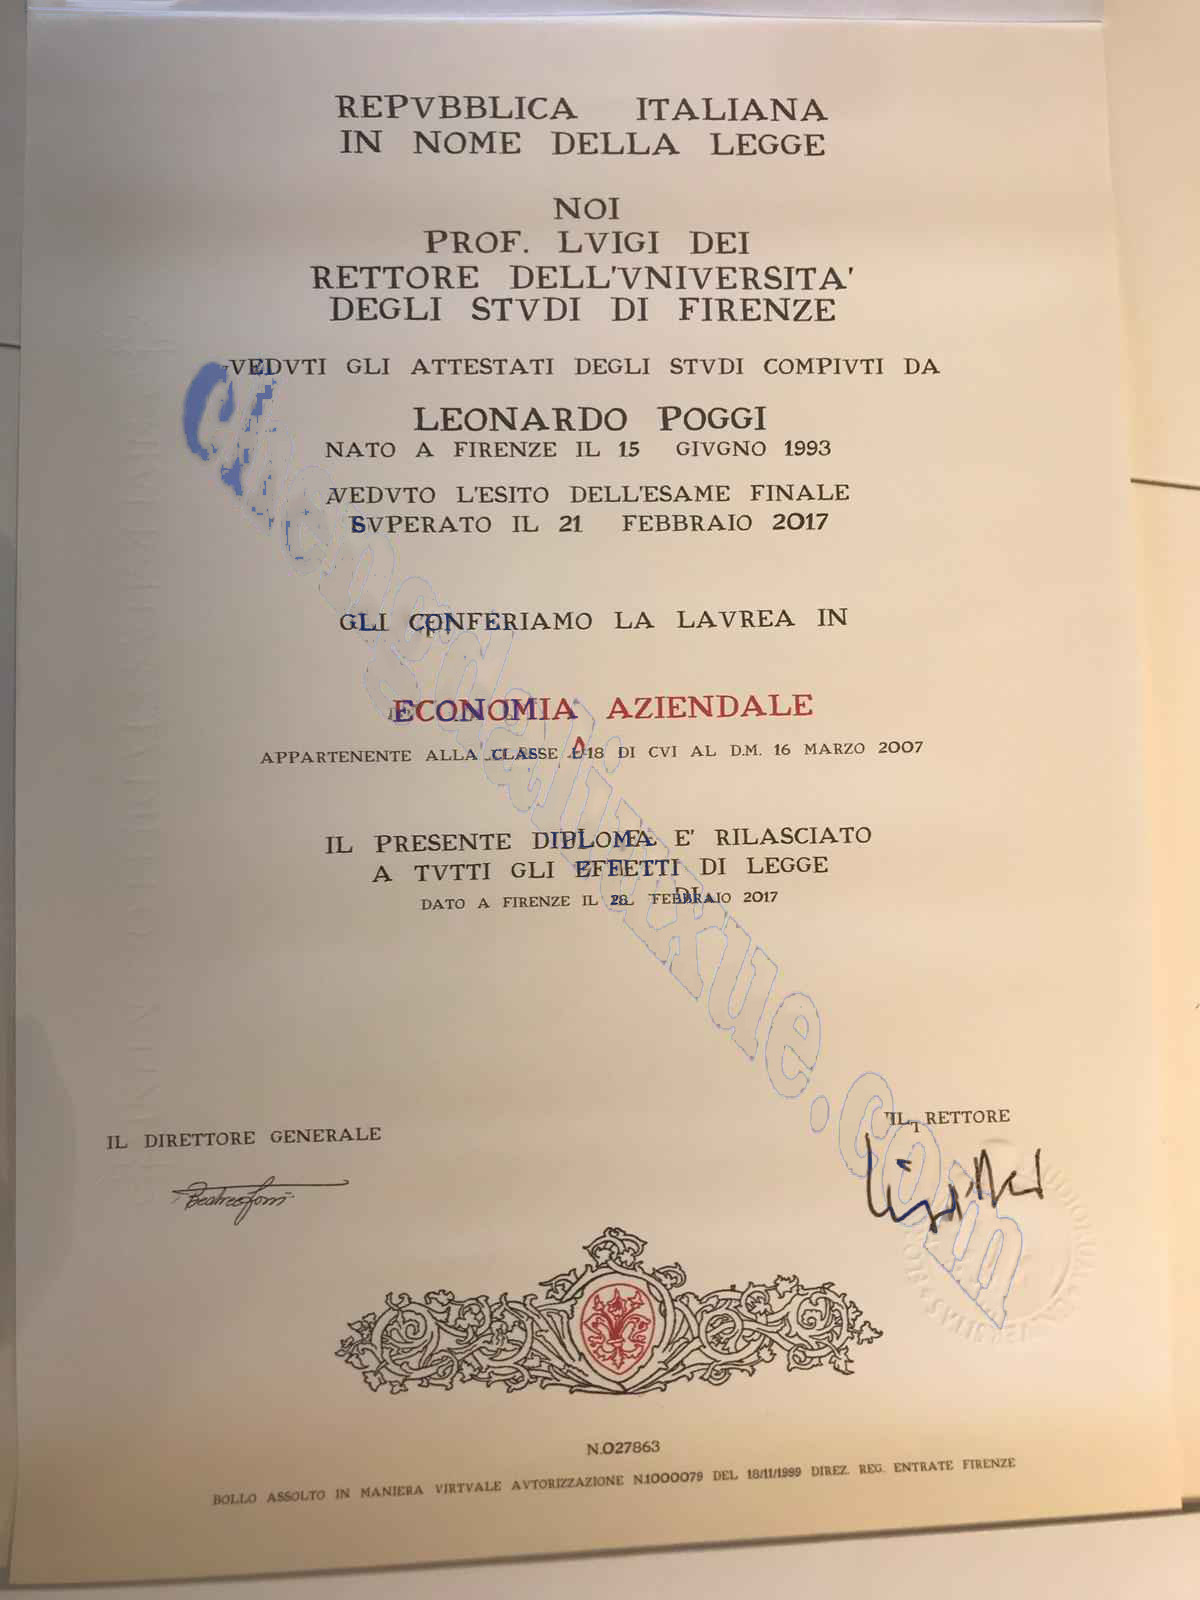 意大利佛罗伦萨大学毕业证模板（Customized graduation certificate from the University of Florence, Italy）